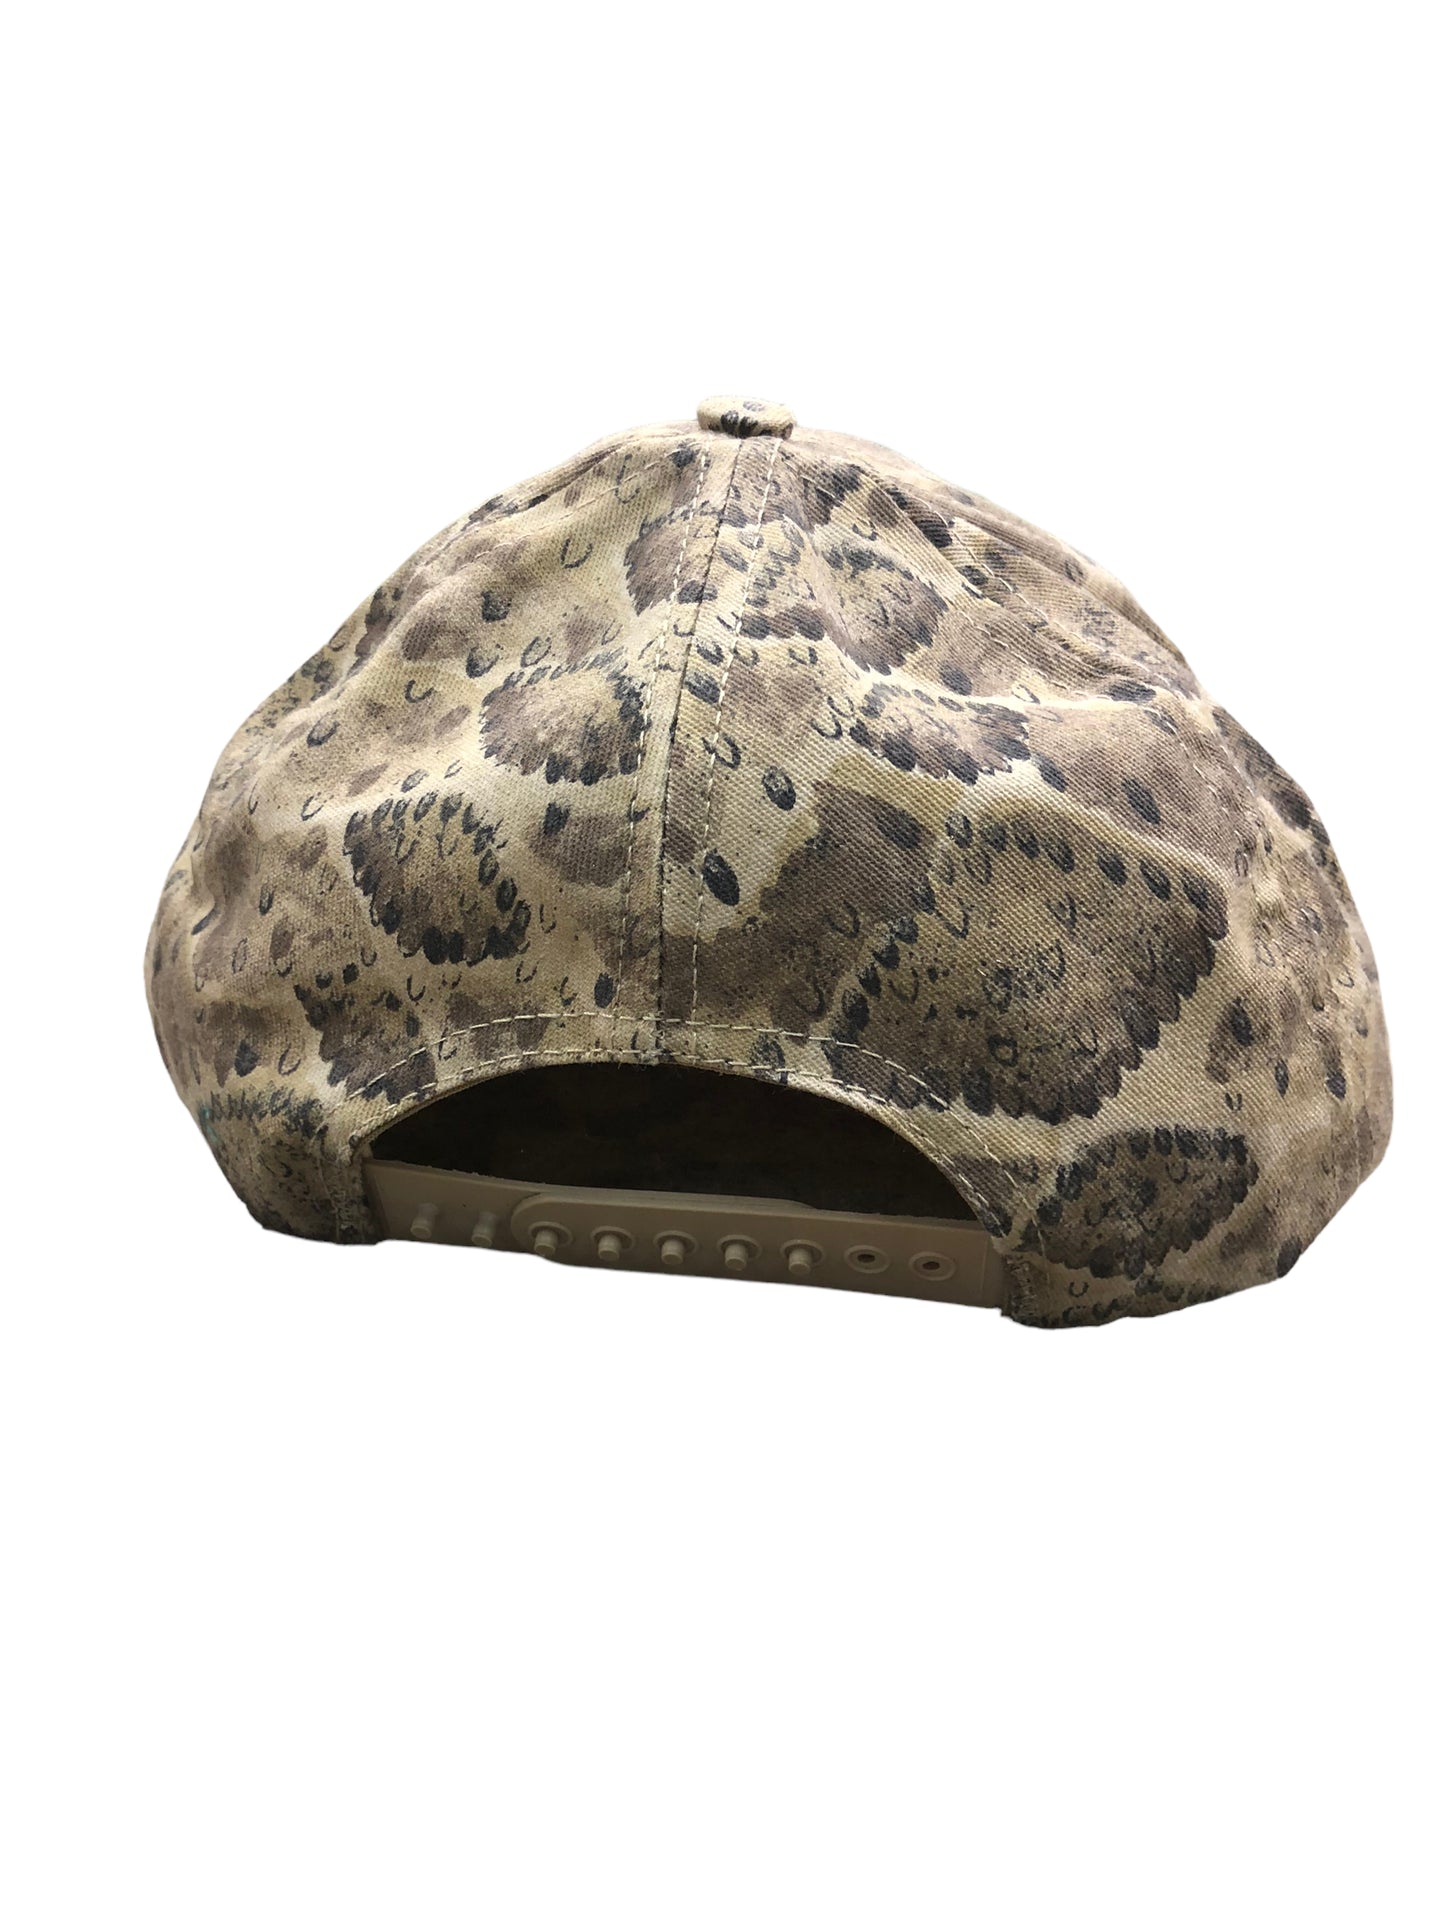 VTG Snakeskin BAMA Snapback Hat